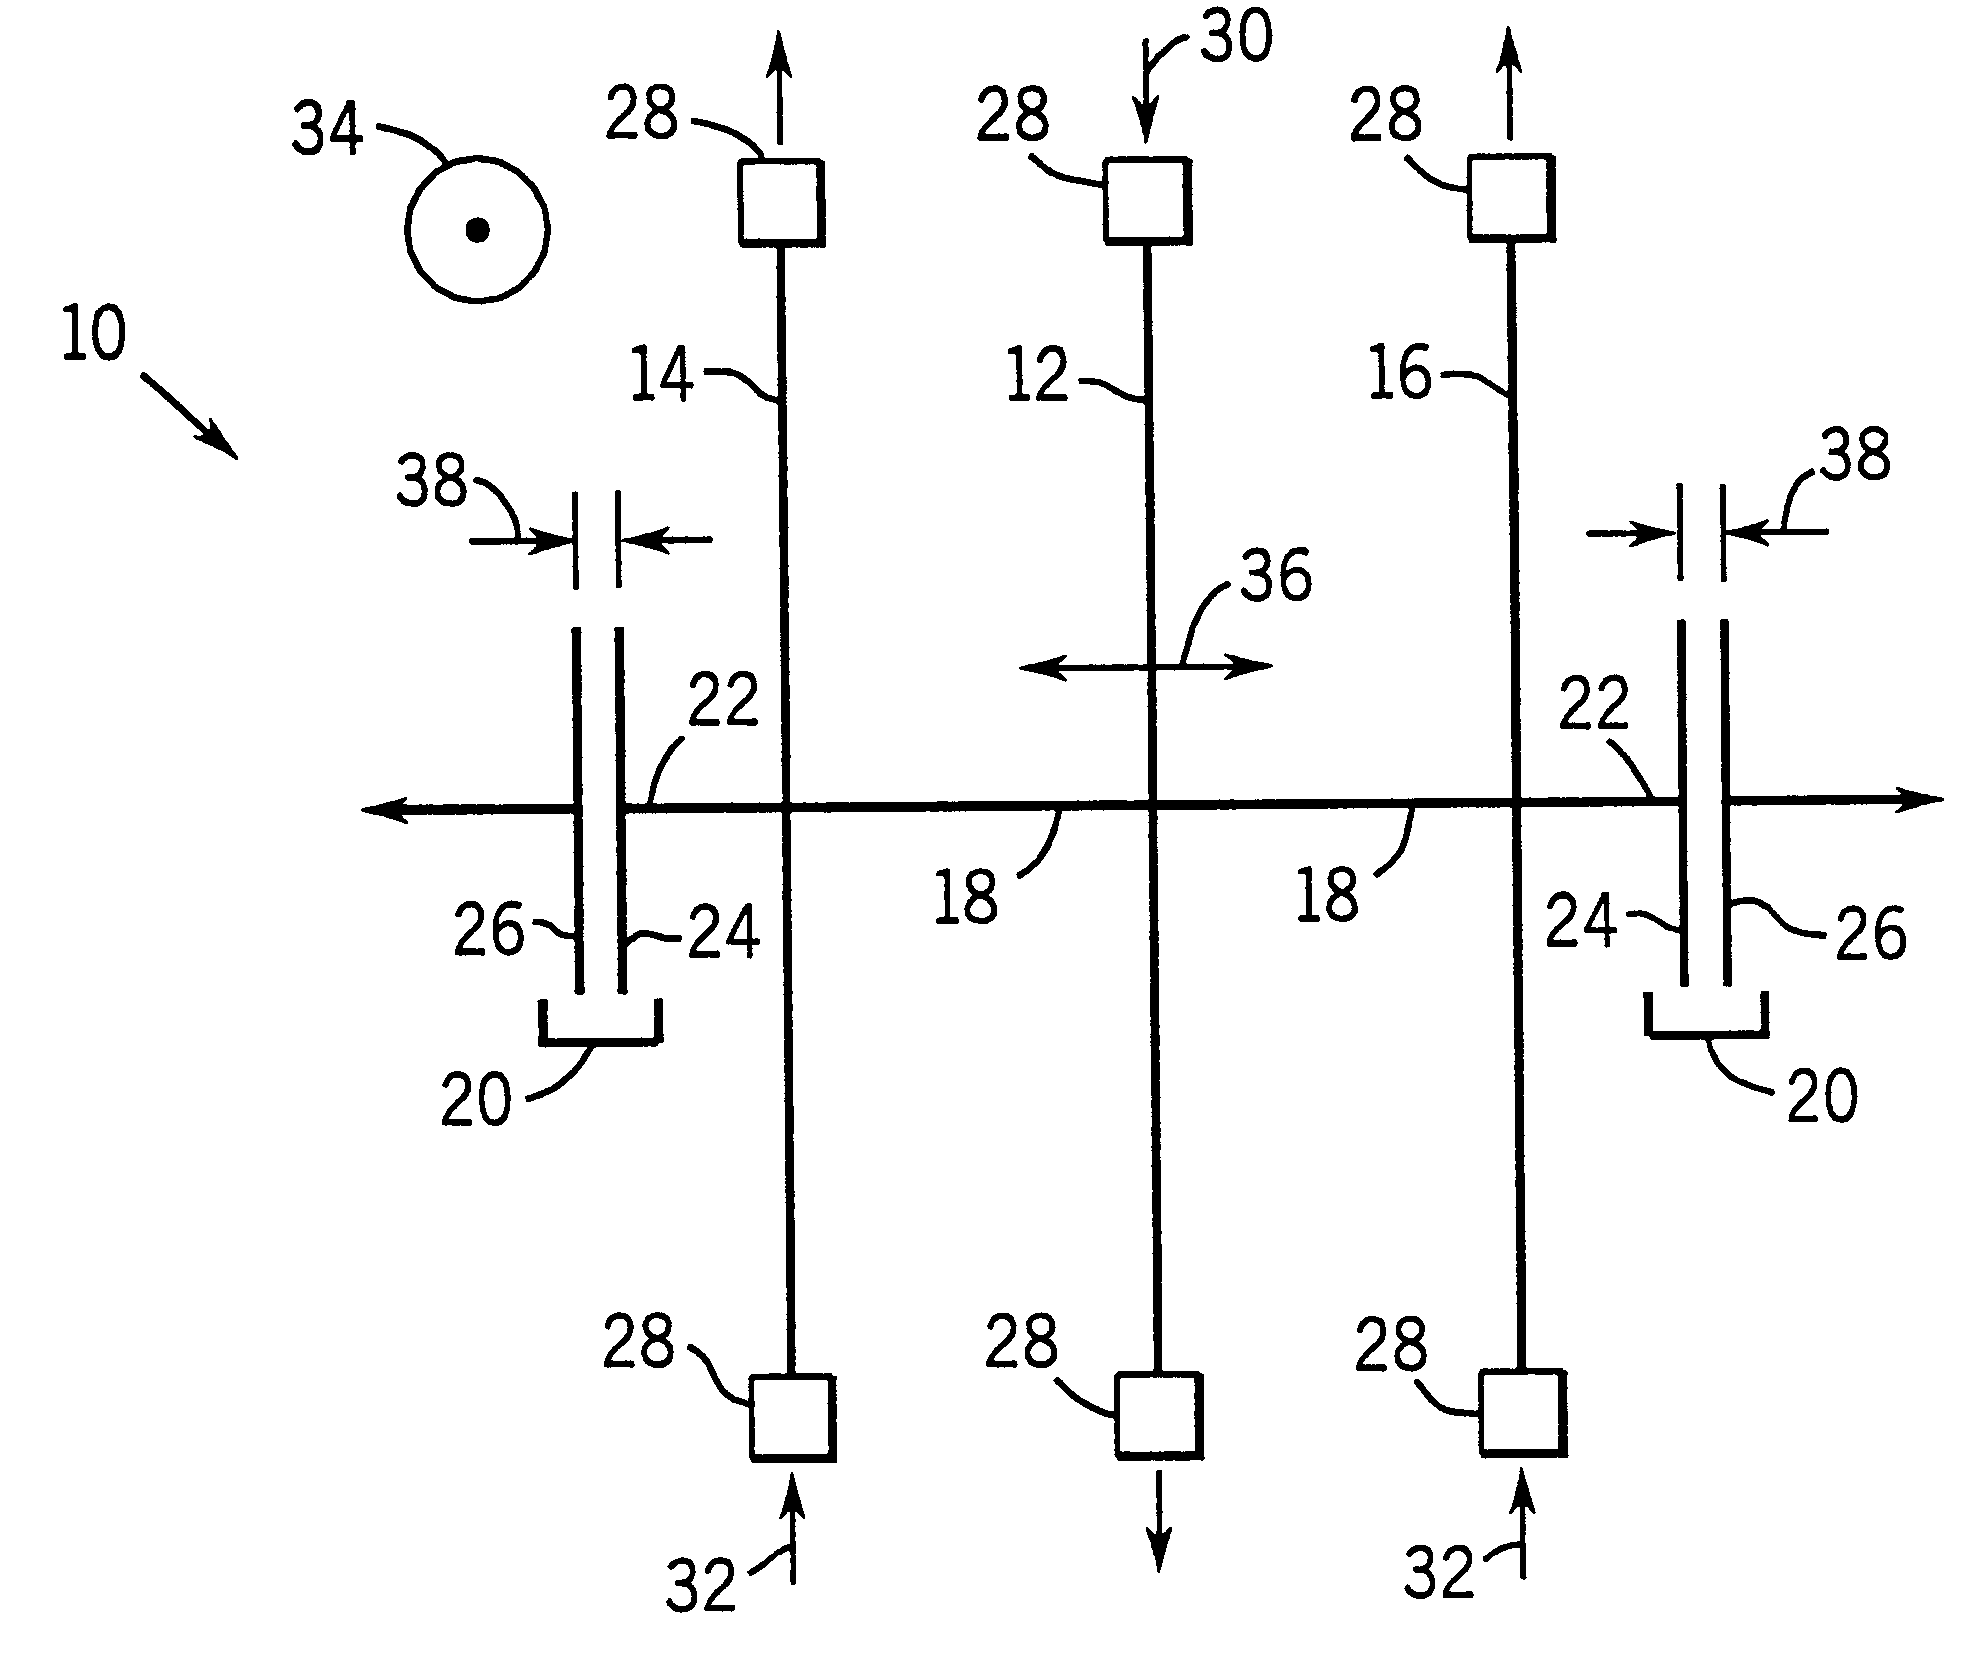 Method for sensing electrical current